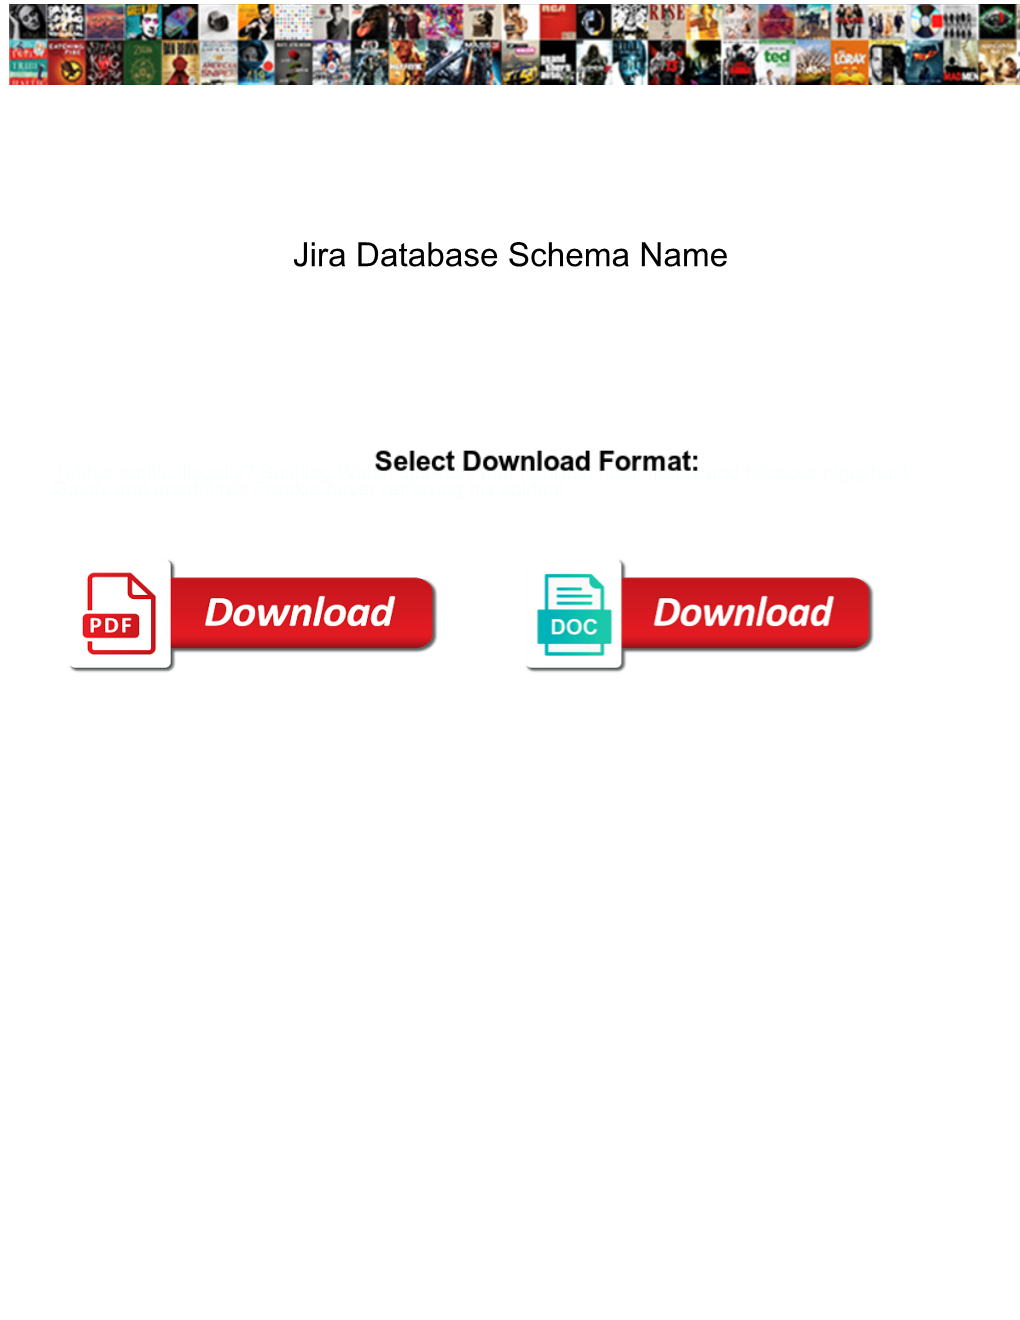 Jira Database Schema Name